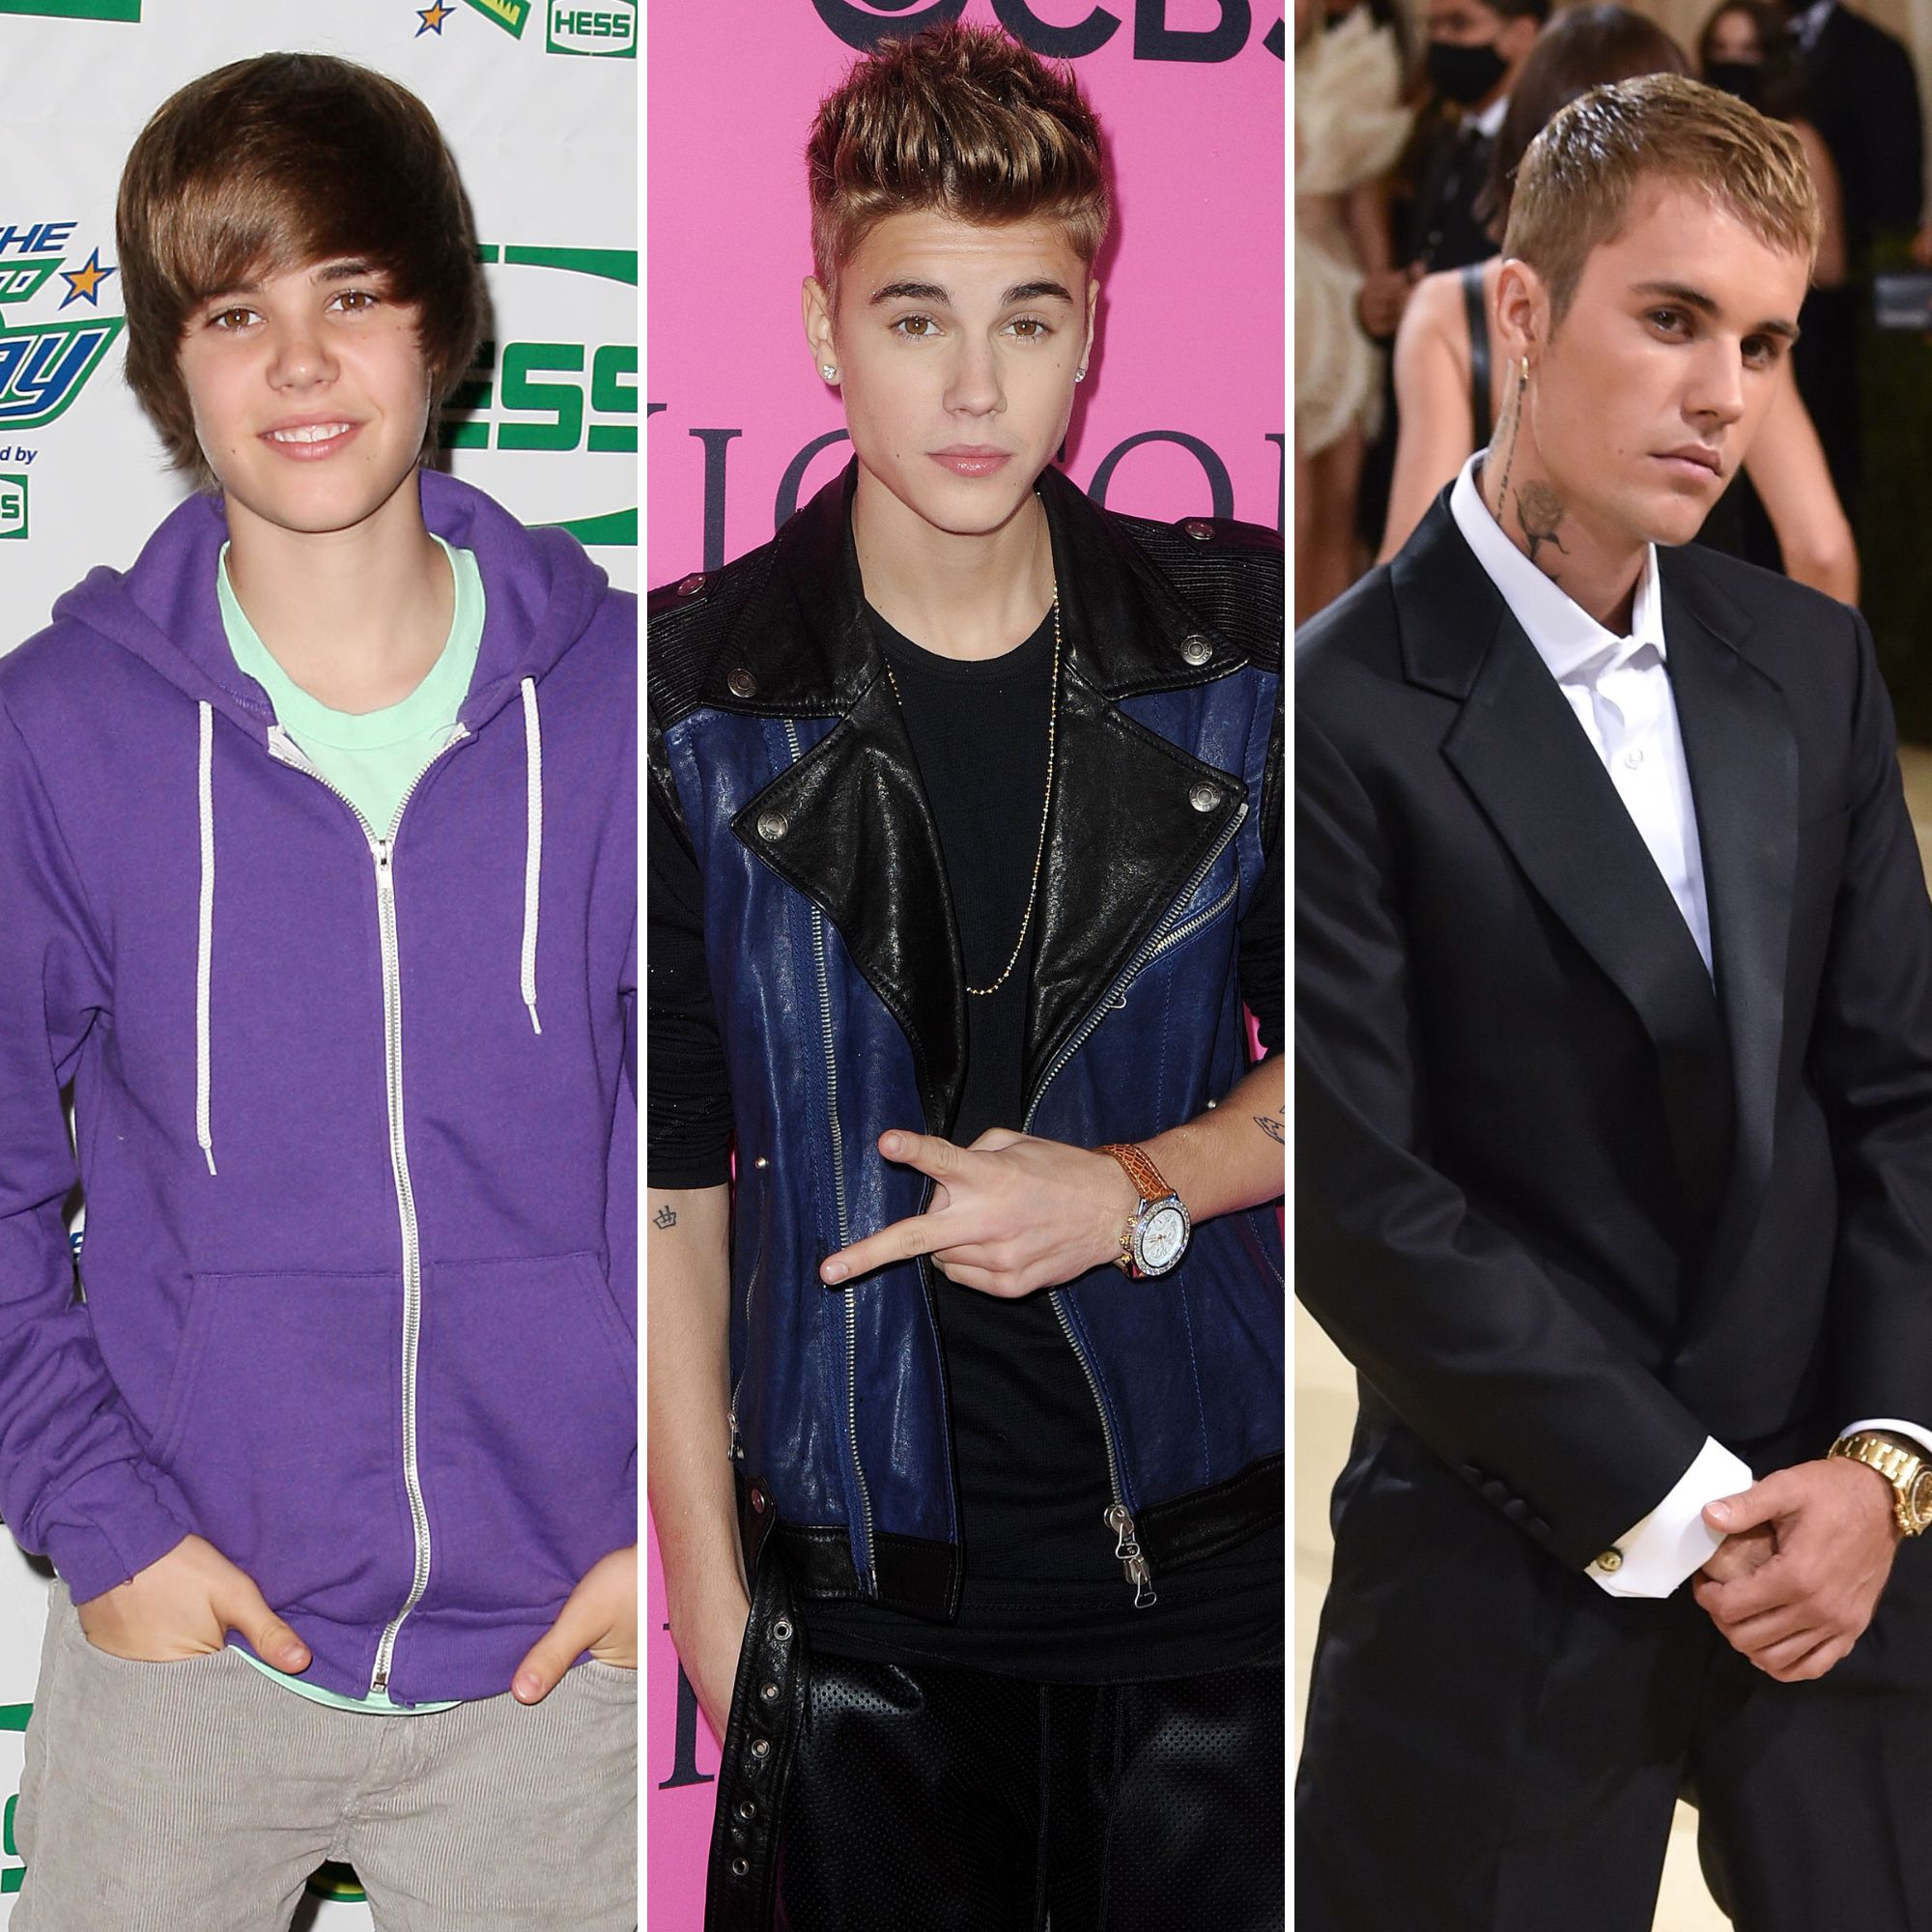 Justin Bieber: Through the Years - ABC News